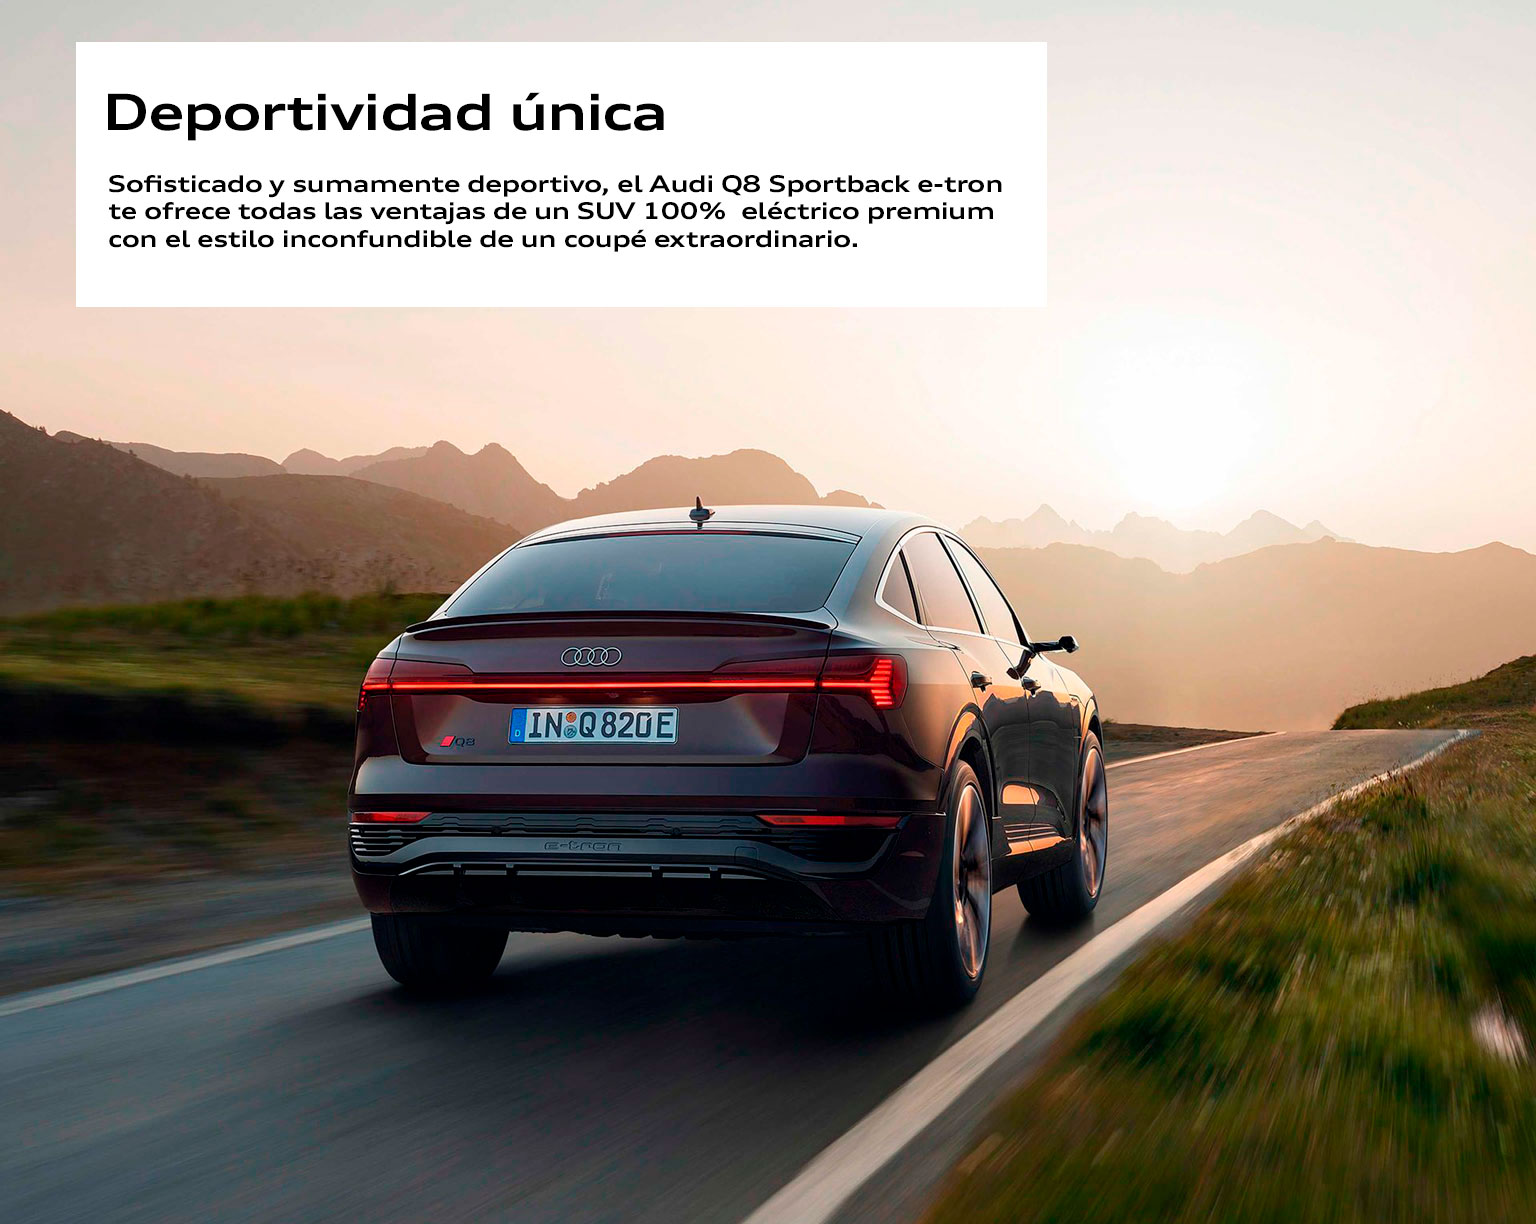 Audi-Q8-Sportback-etron-deportividad-unica